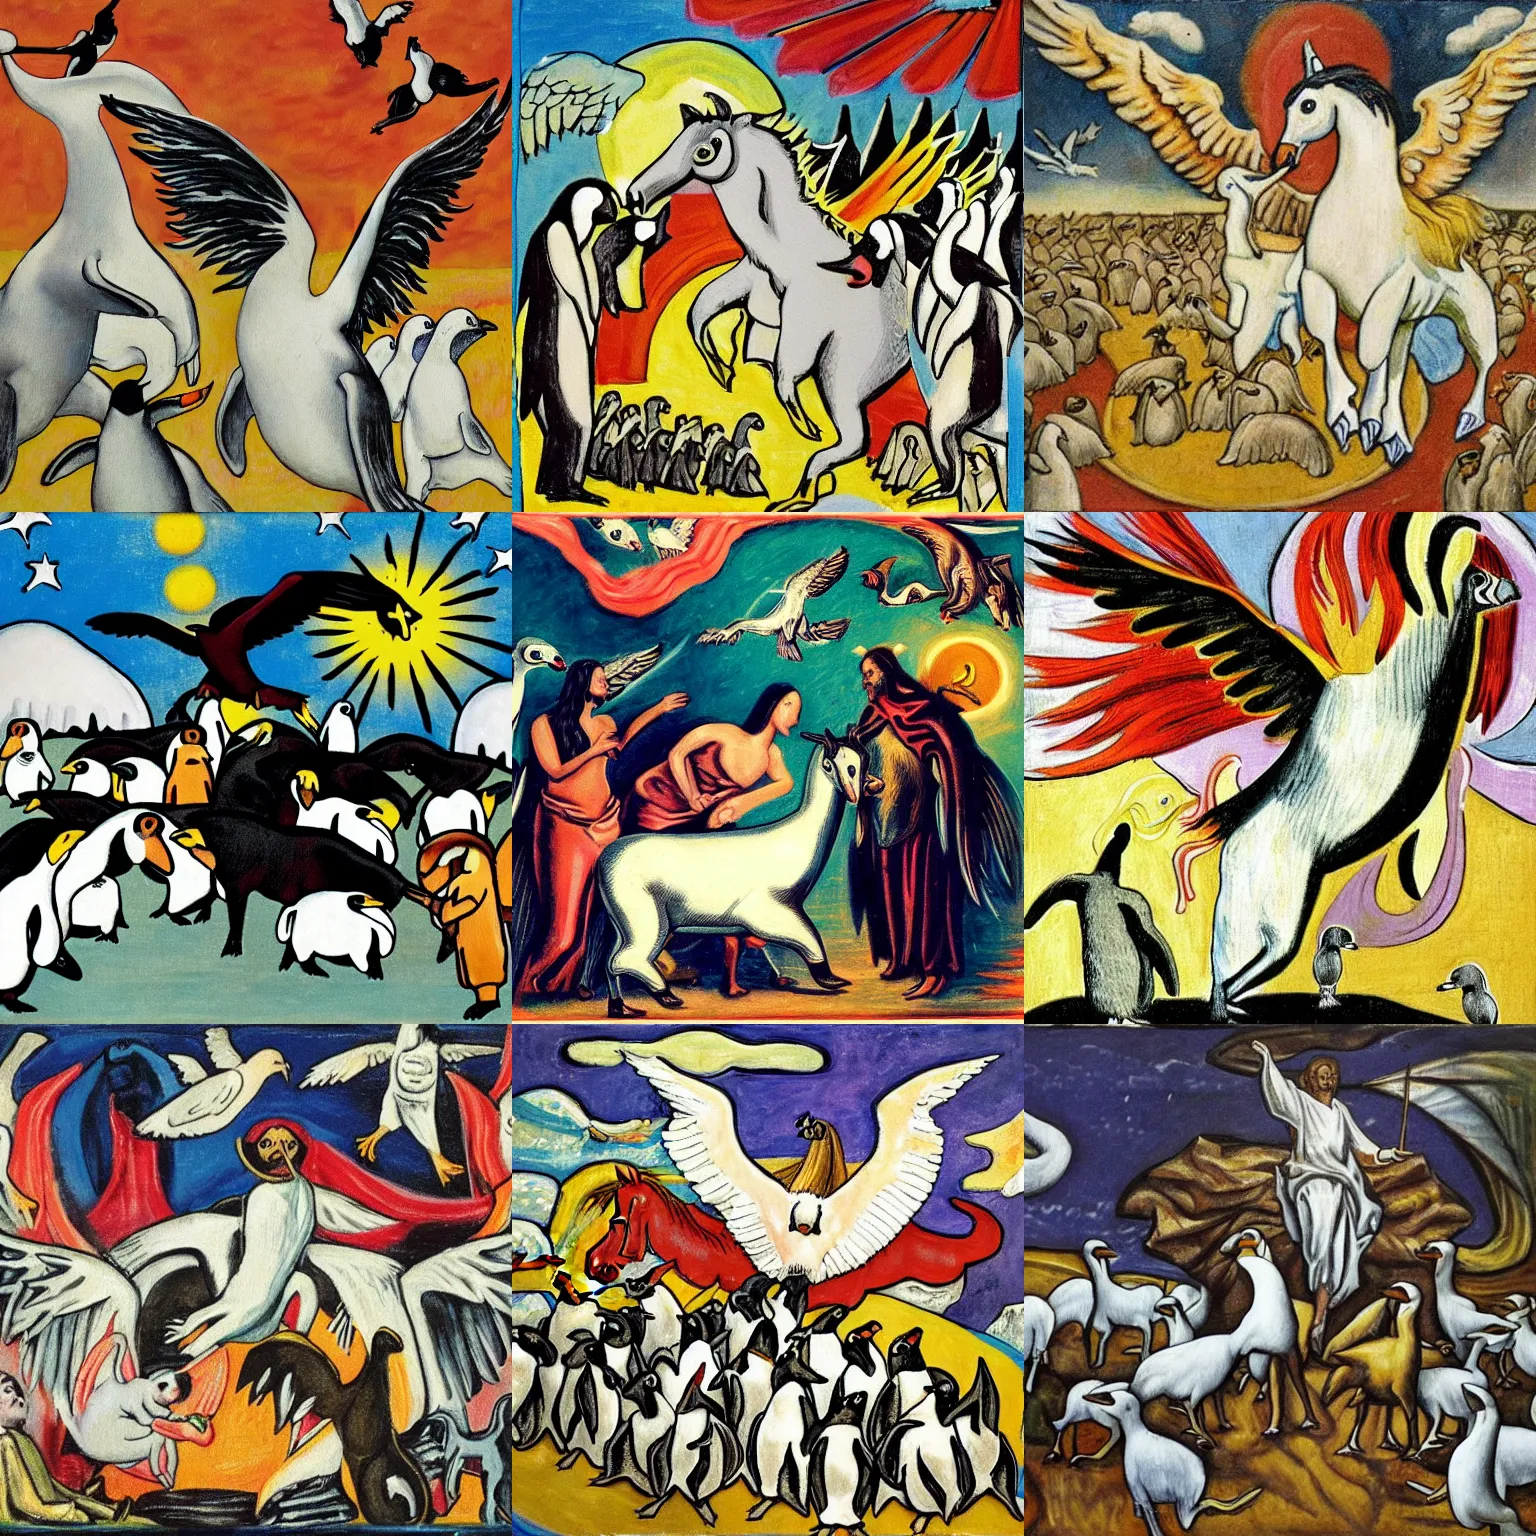 Prompt: Satan hand feeding Pegasus, Jesus riding on Pegasus, background of penguins, expressionism